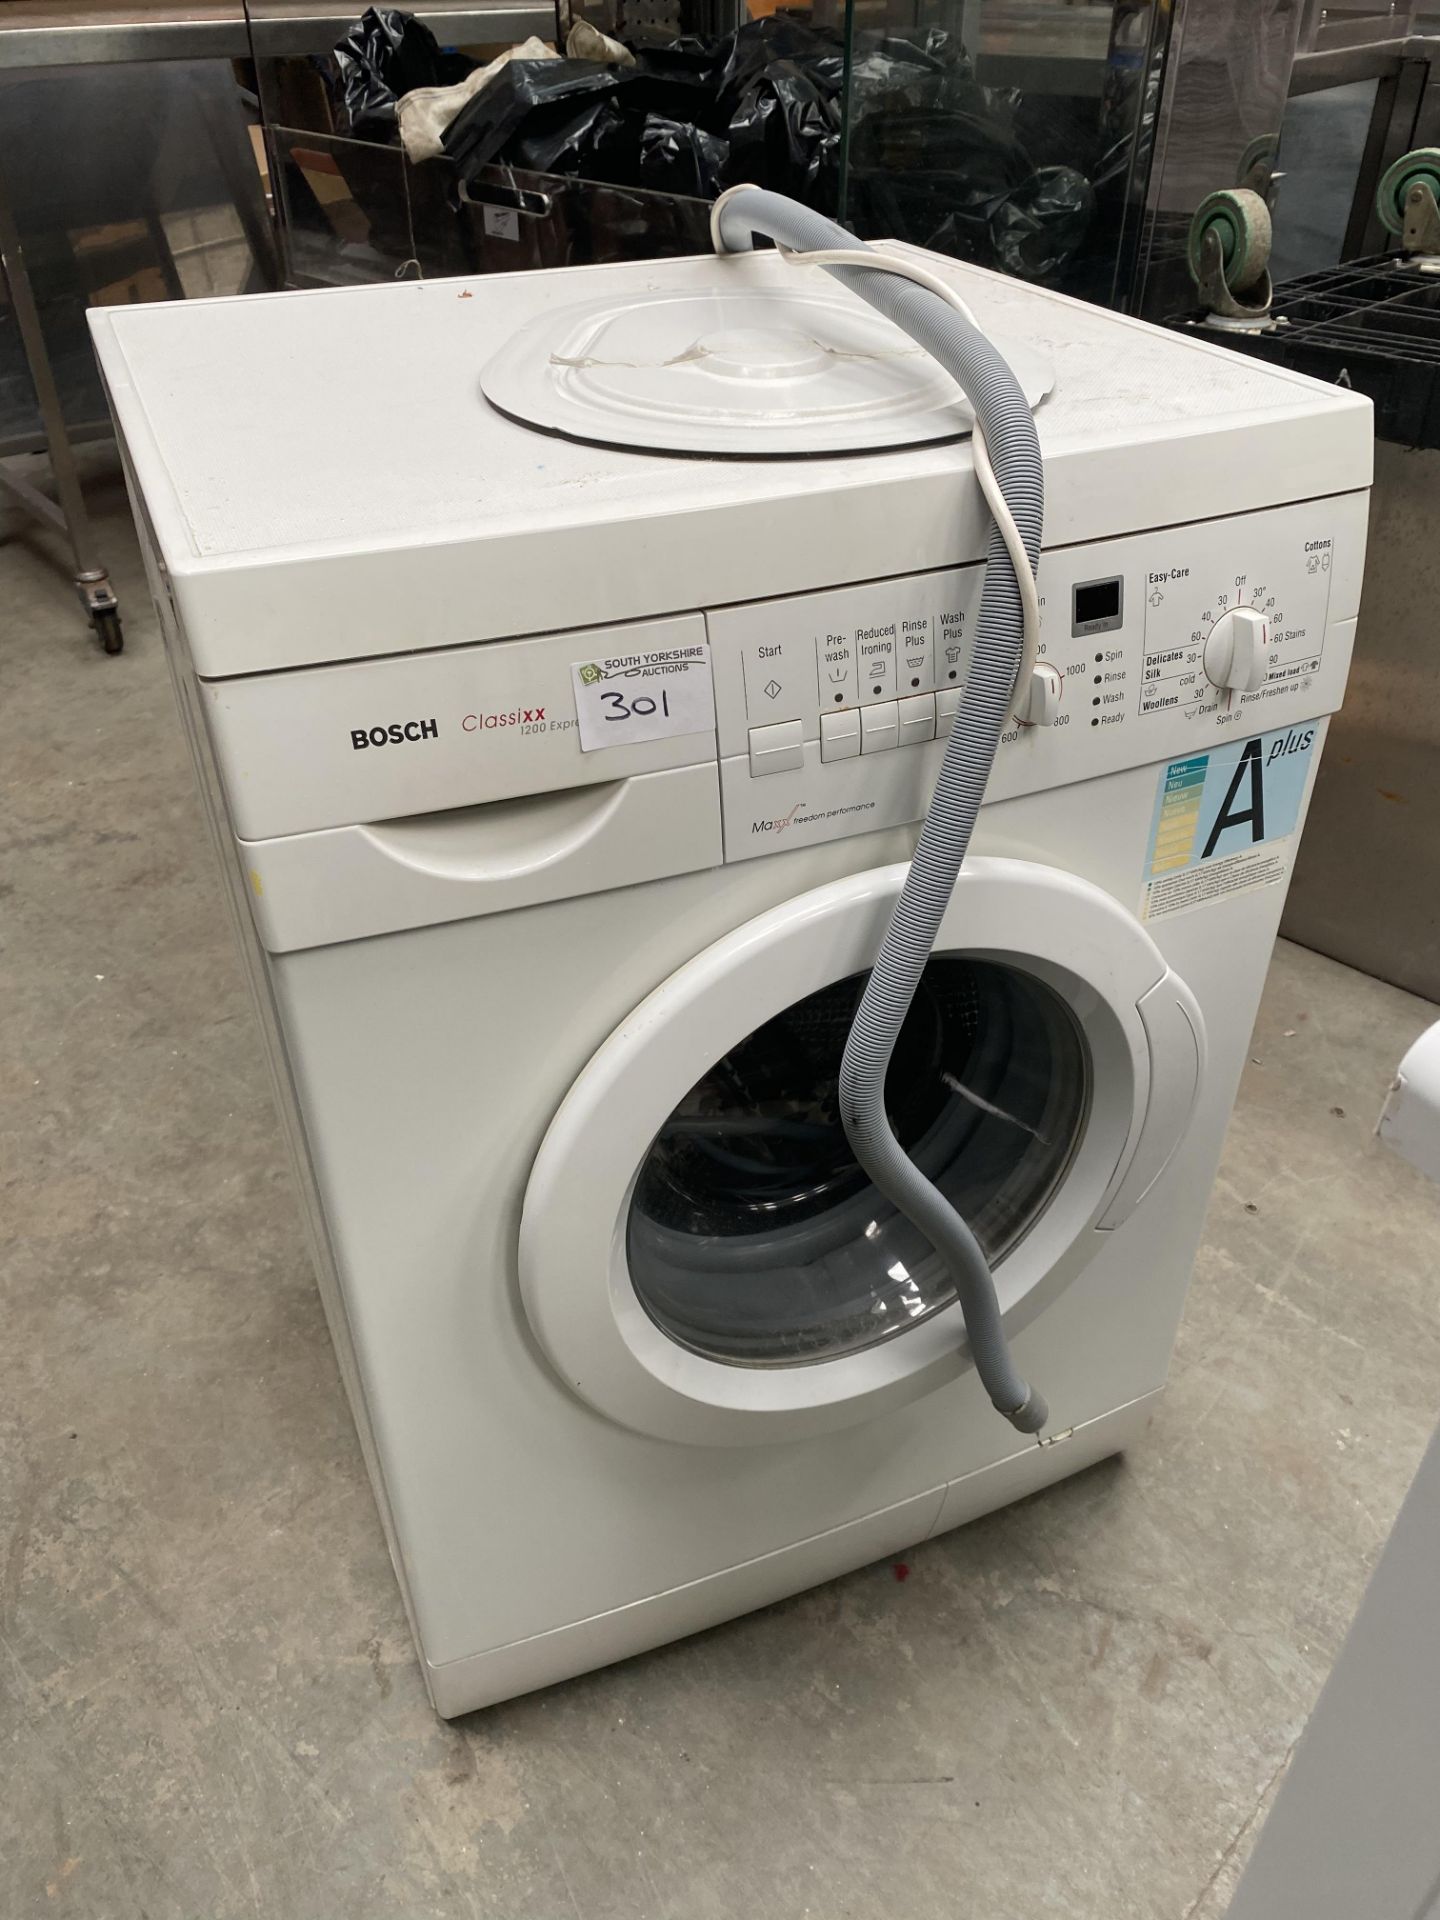 Domestic Bosch Washing Machine